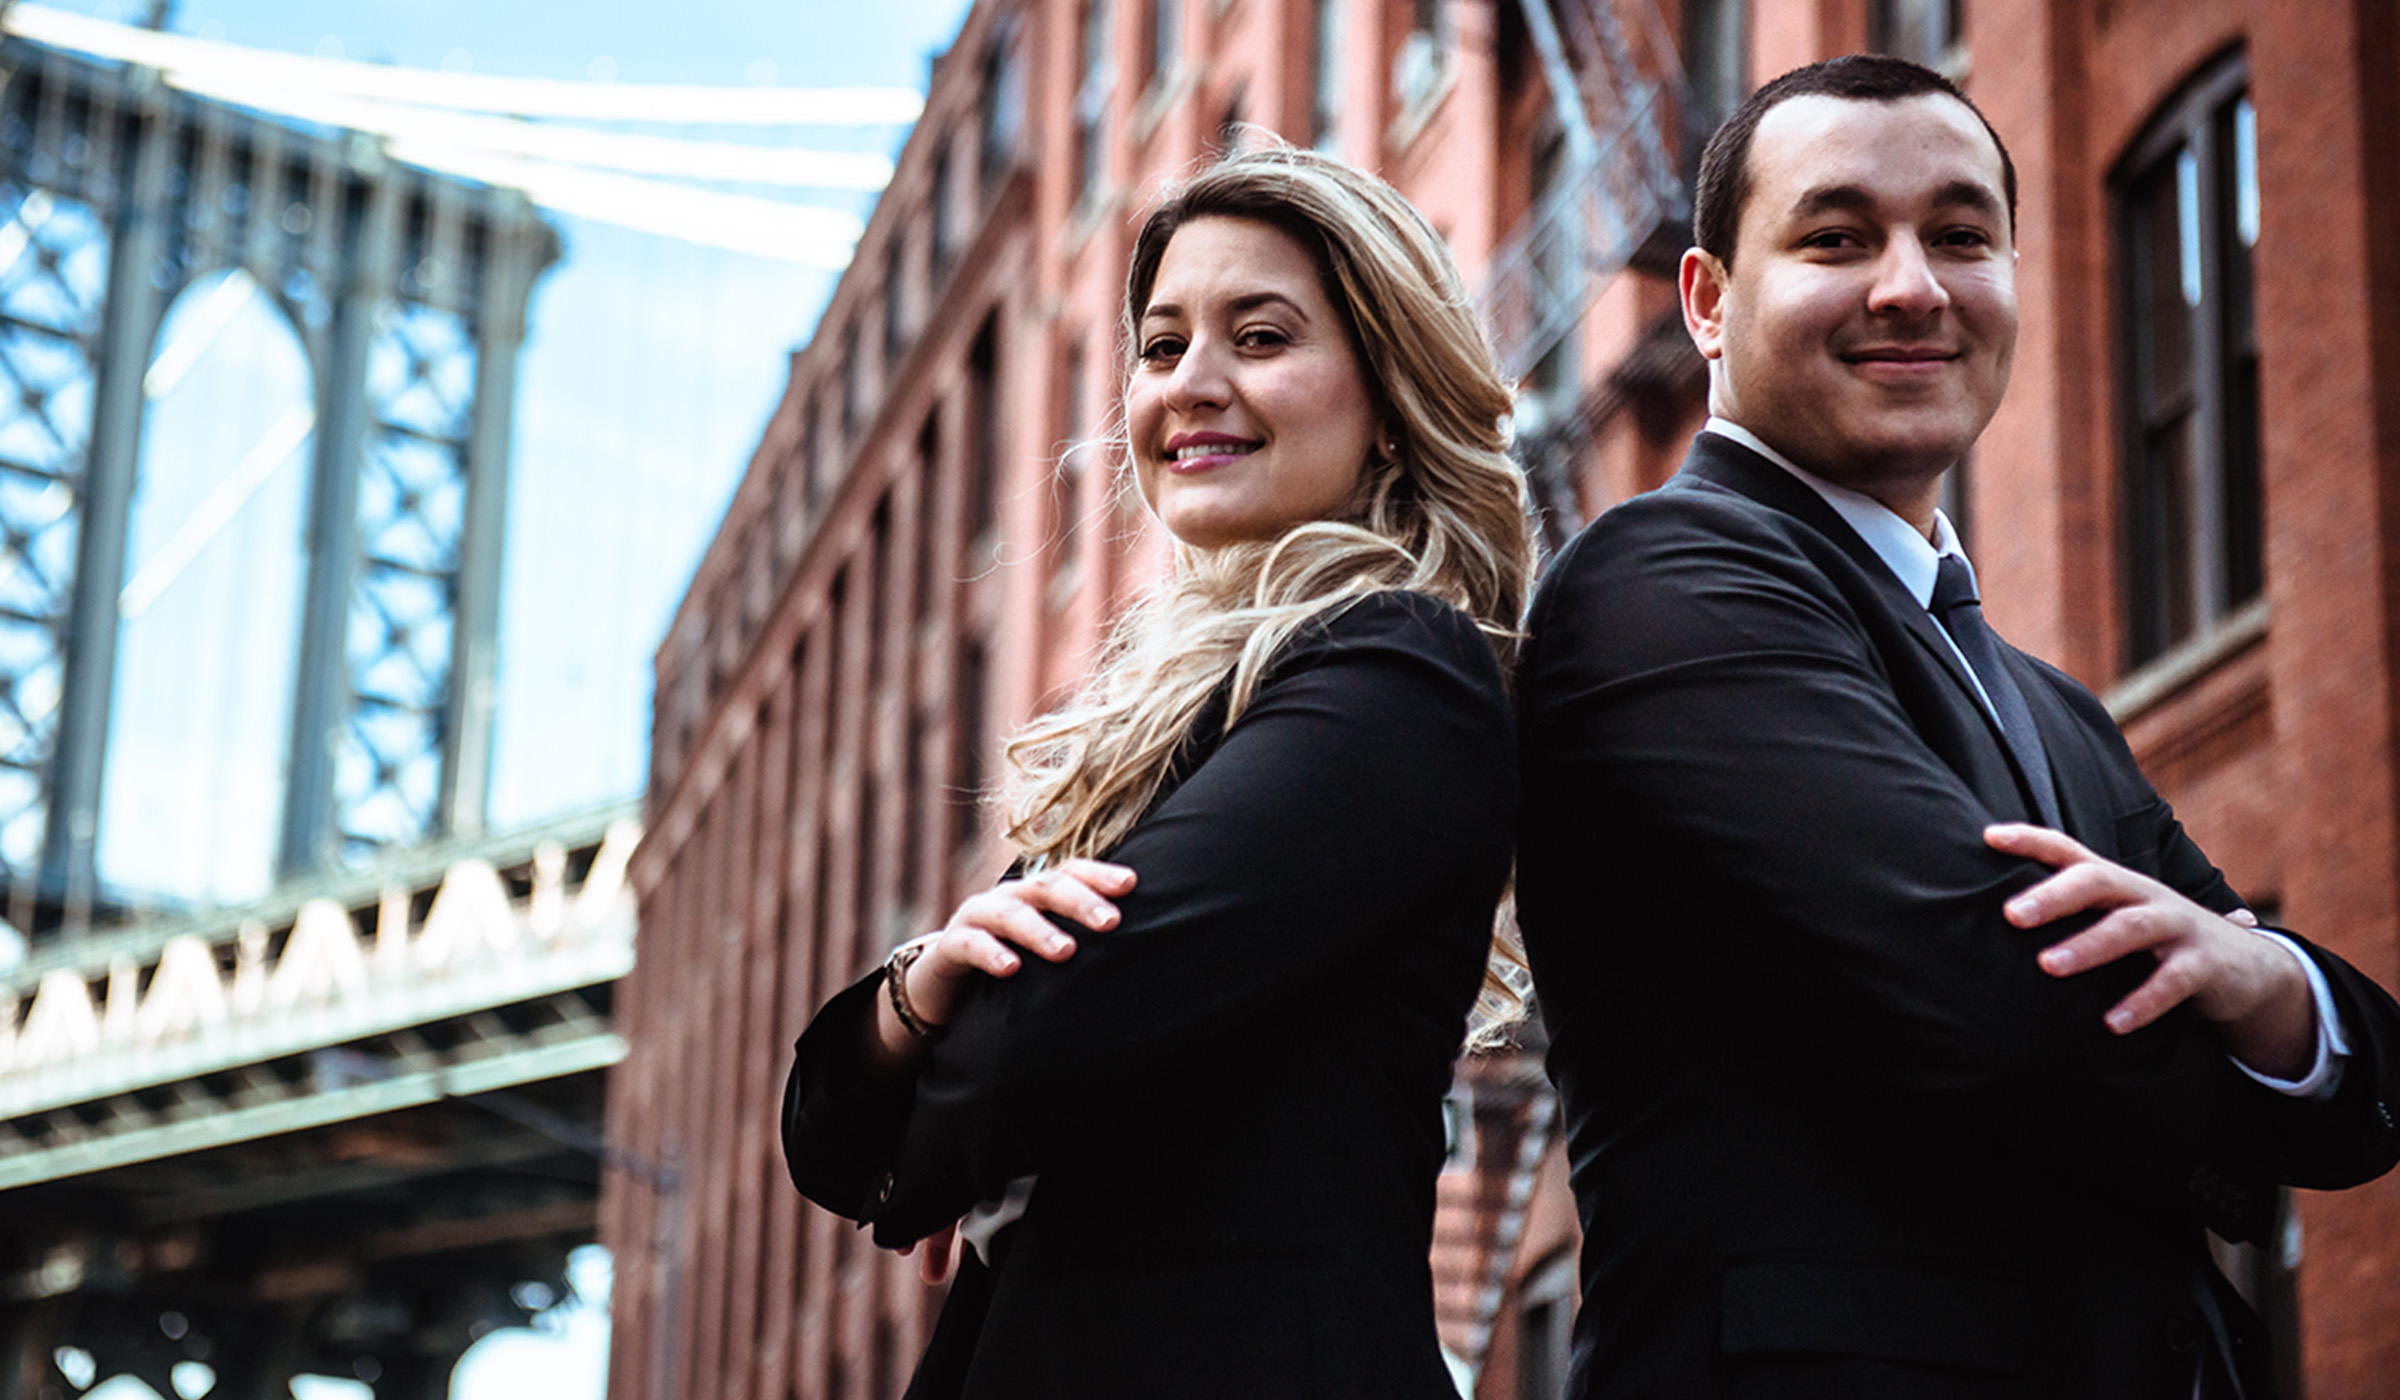 Ricardo Rosa e Verena Cordeiro organizam Primeiro Encontro de Business para Brasileiros nos EUA